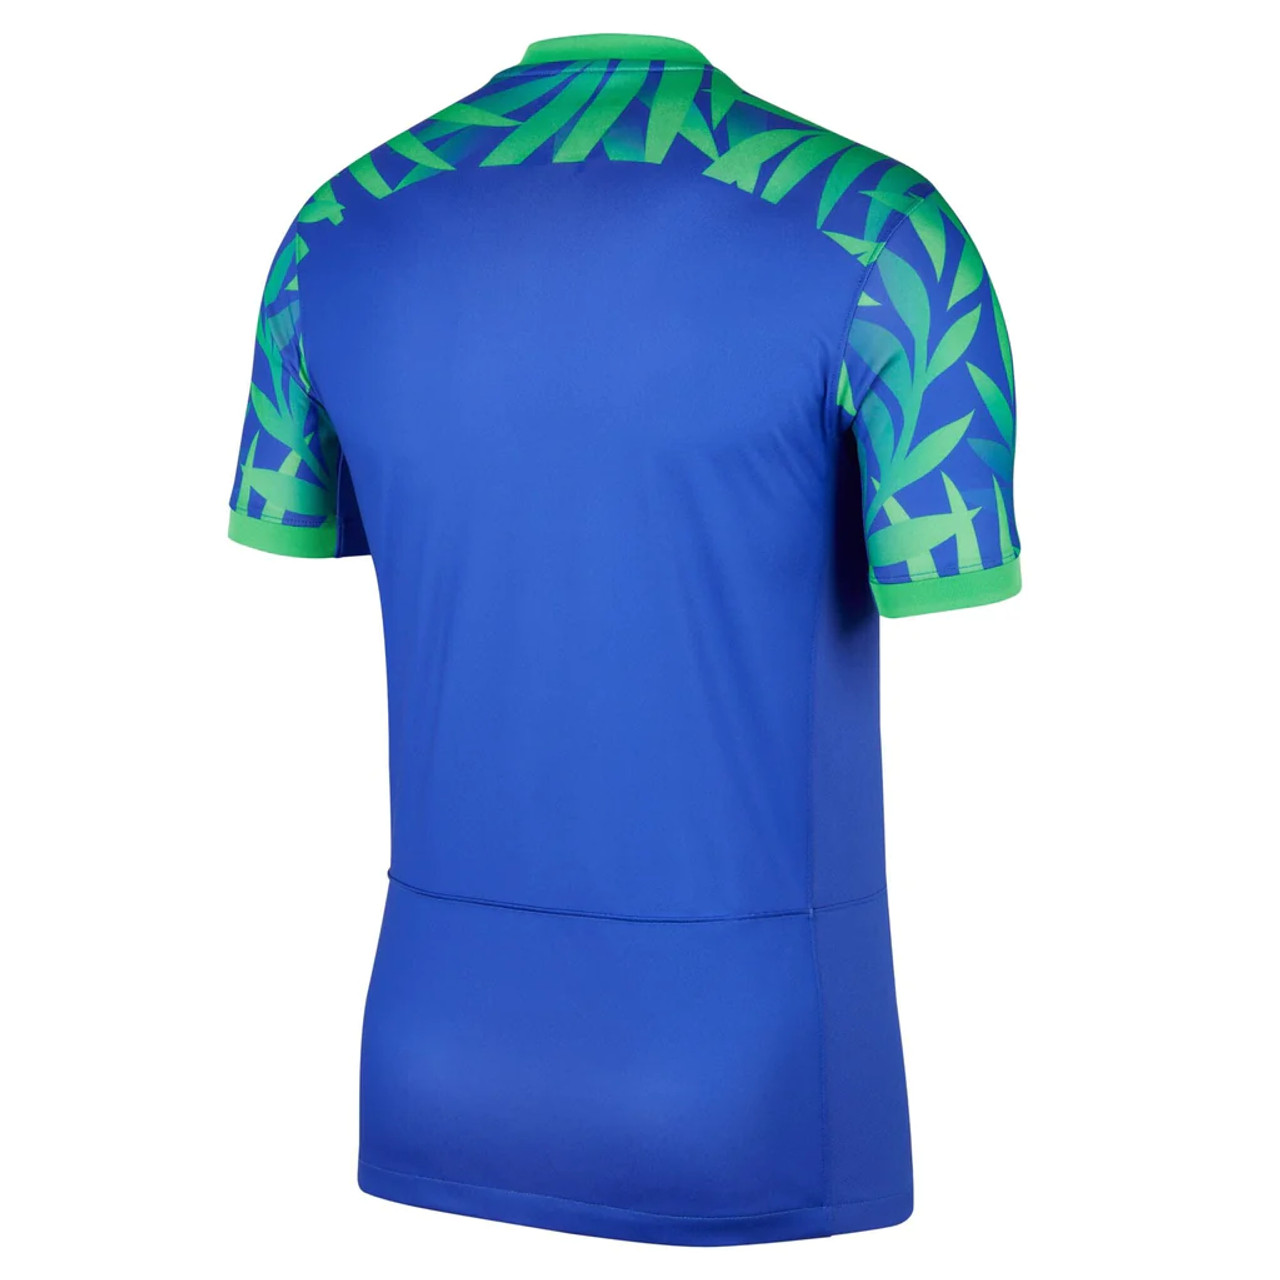 Nike Brazil Soccer Training Jacket Womens XL Teal Zip Up Football Brasil  Warm Up